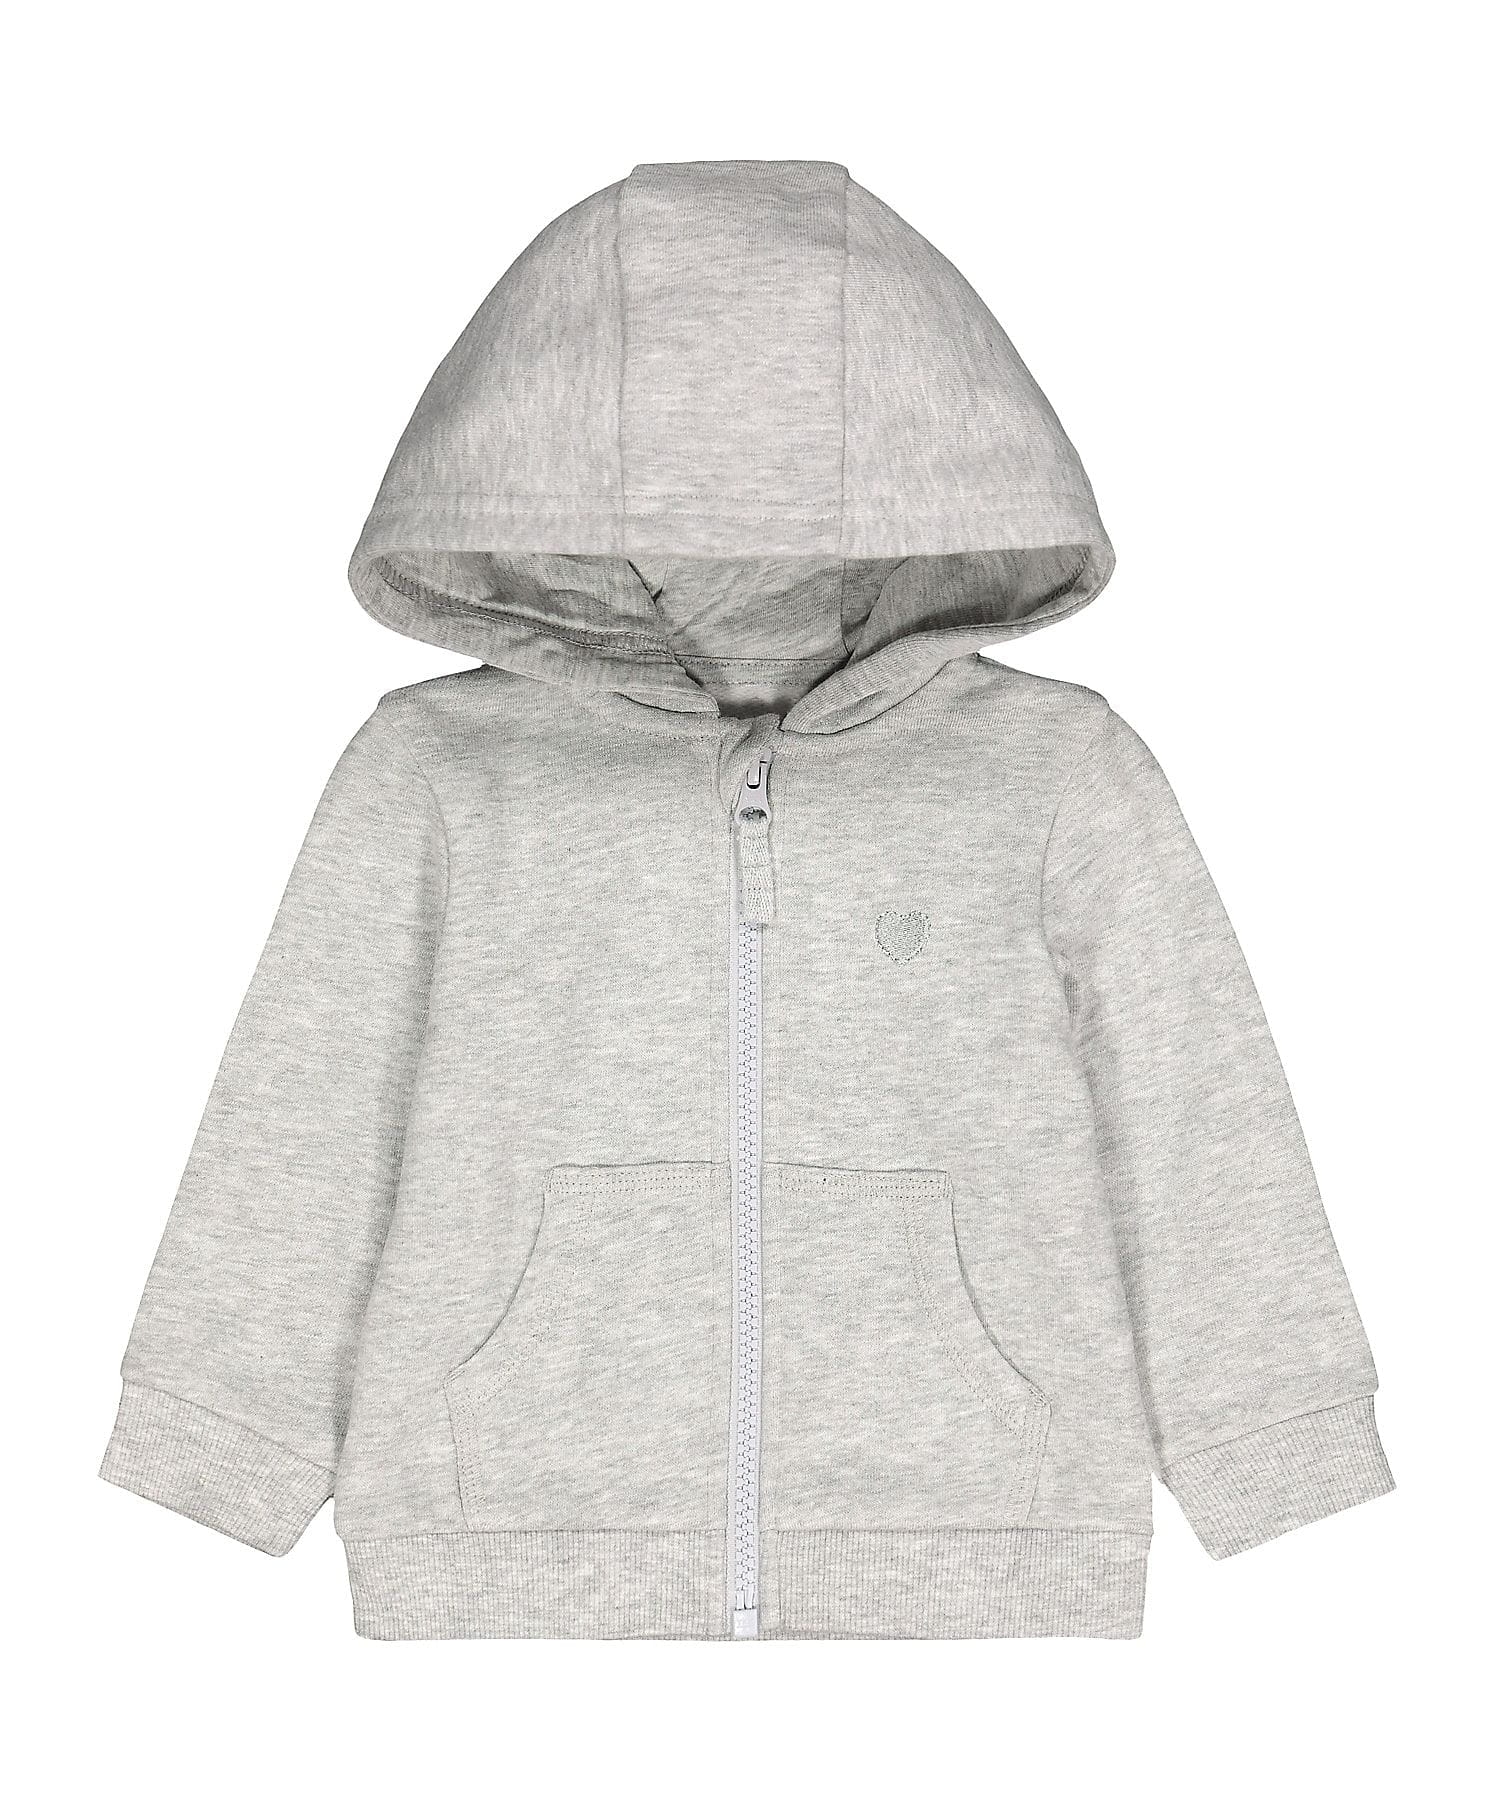 Mothercare | Girls Full Sleeves Hooded Sweatshirt Zip Opening - Grey 0